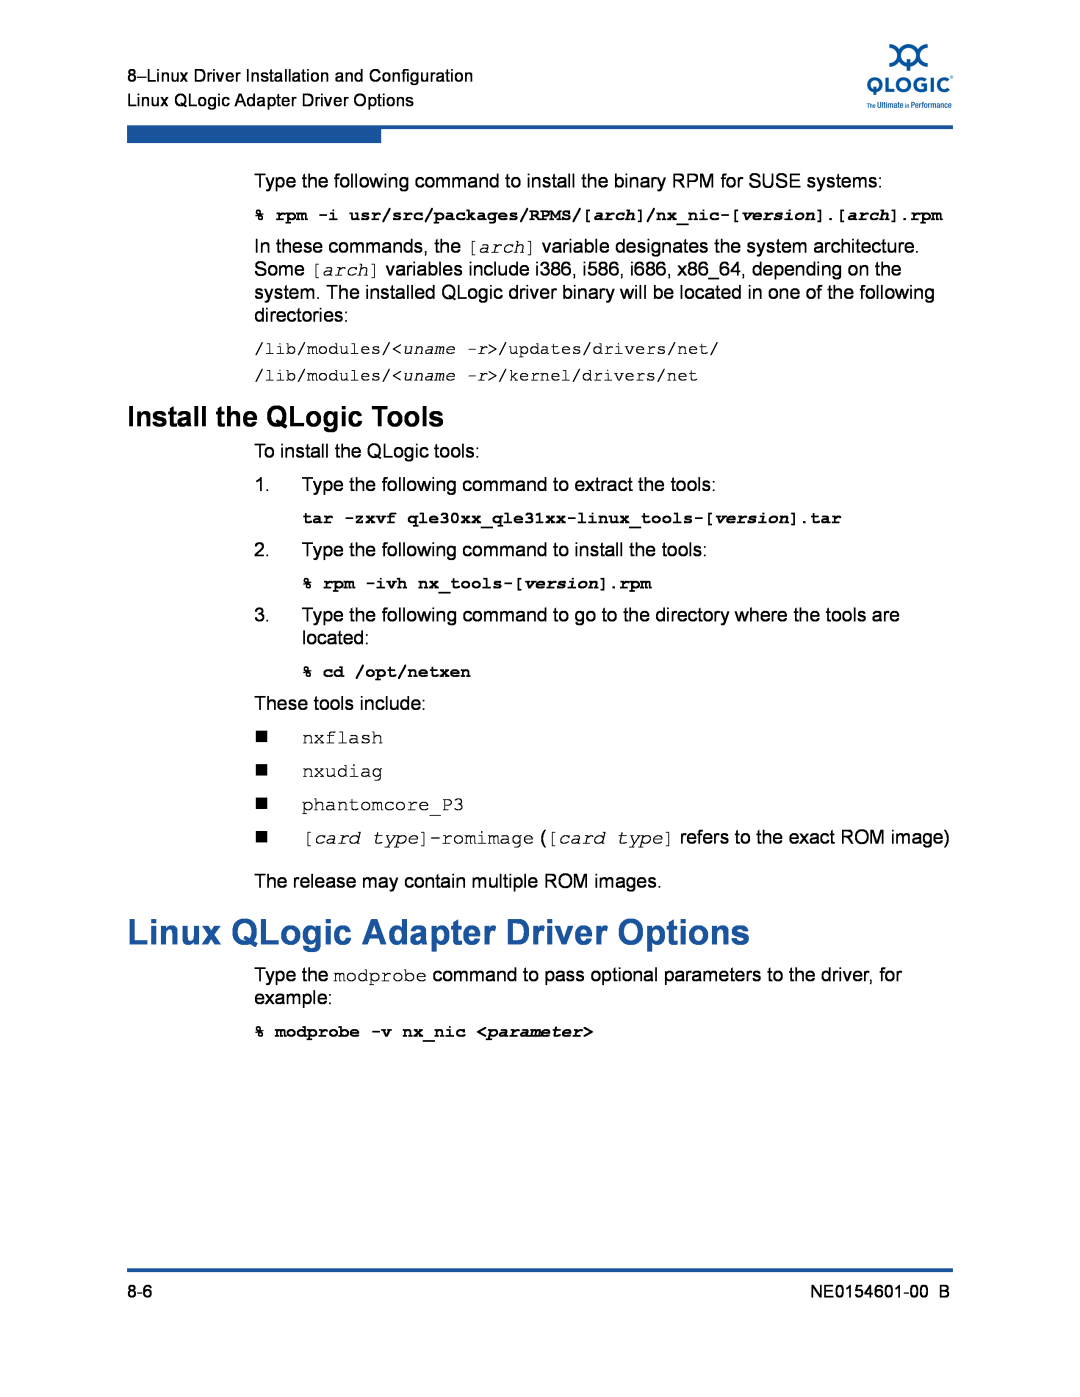 Q-Logic 3100, 3000 manual Linux QLogic Adapter Driver Options, Install the QLogic Tools 